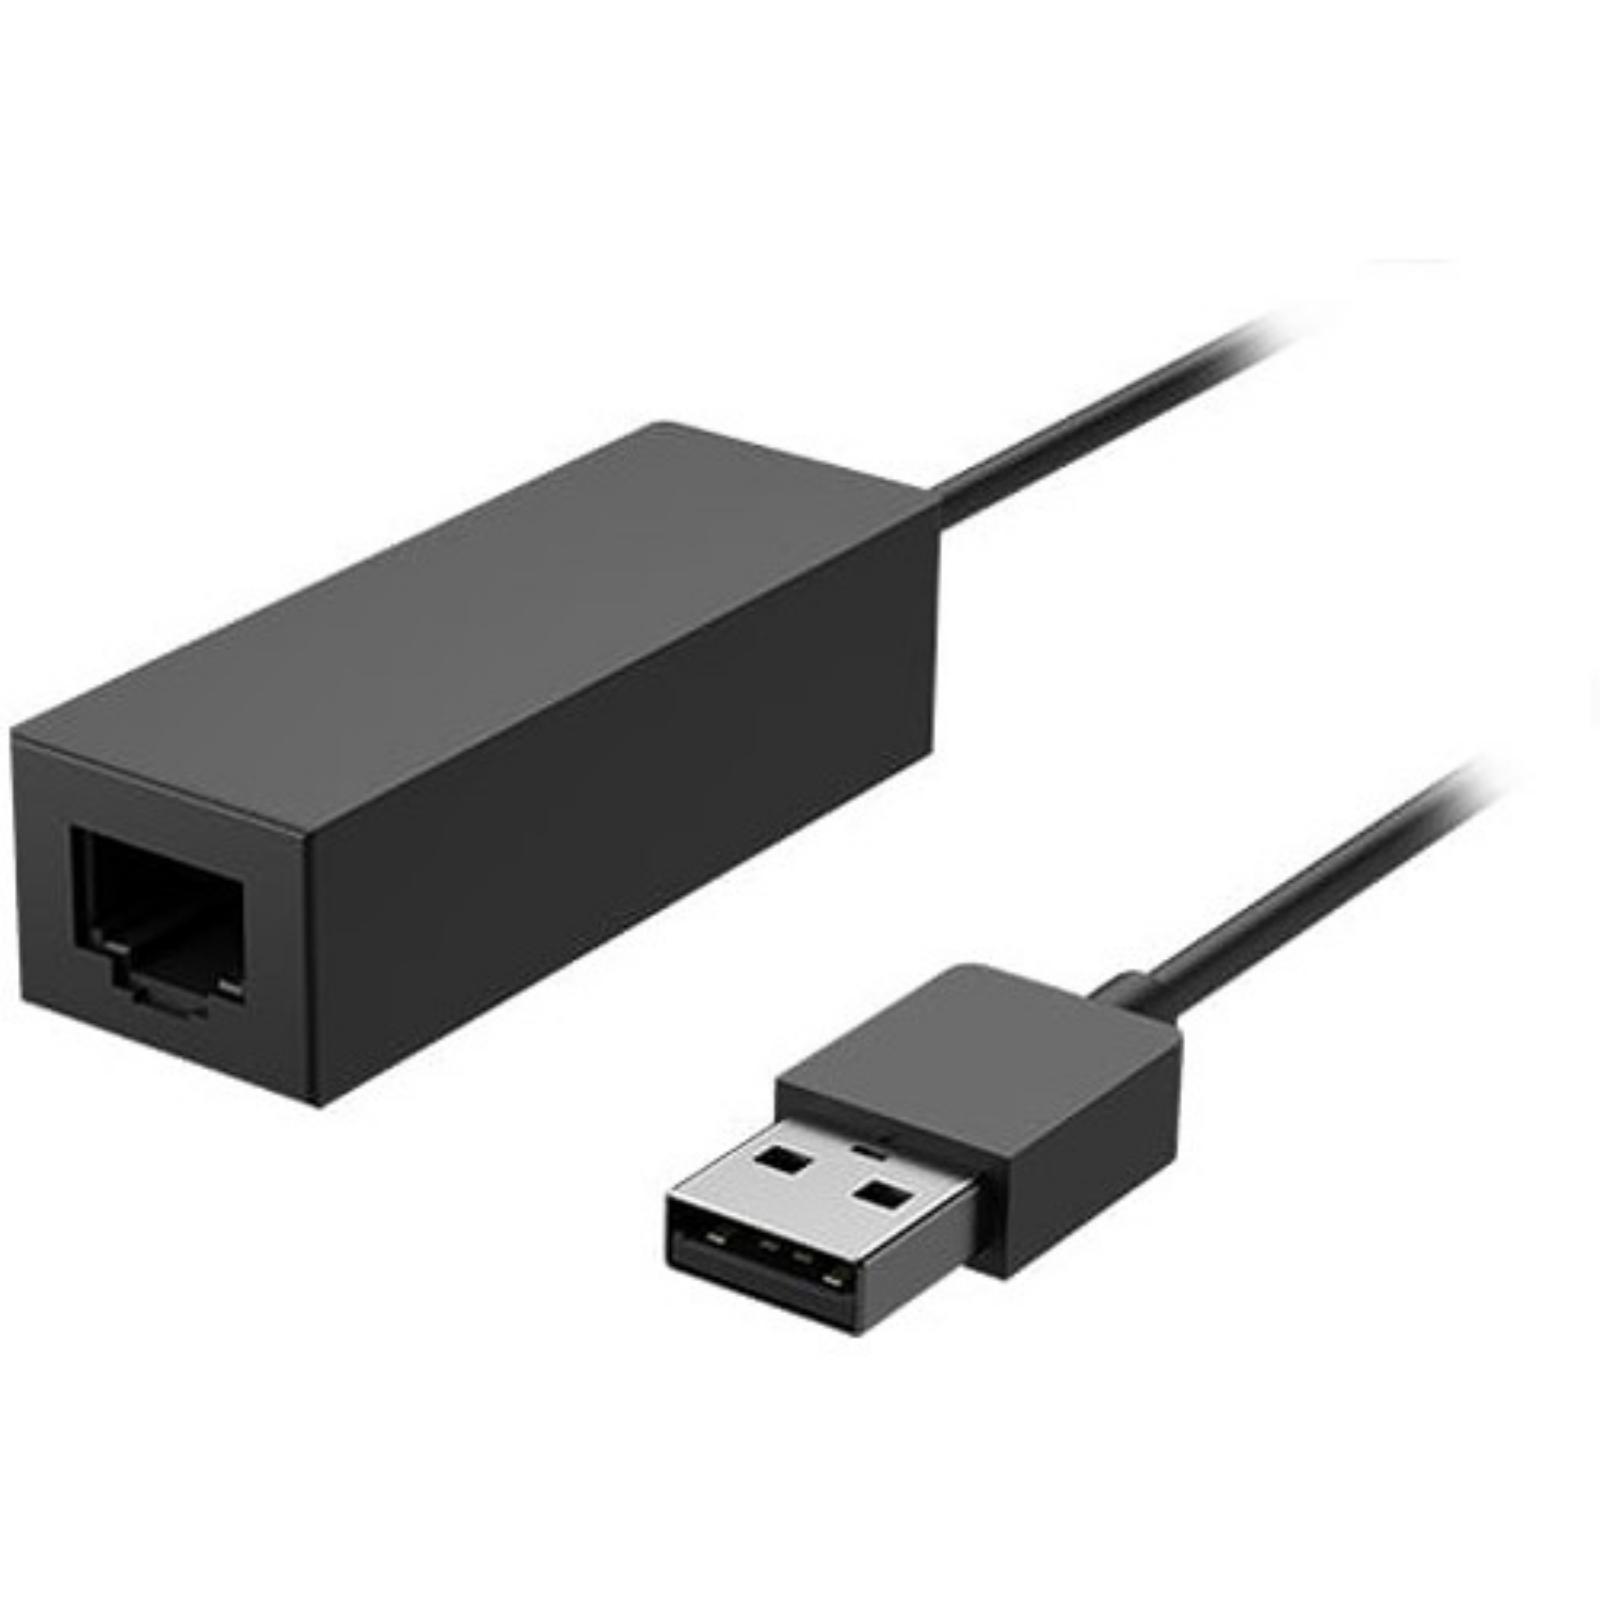 MS SURFACE USB ETHERNET